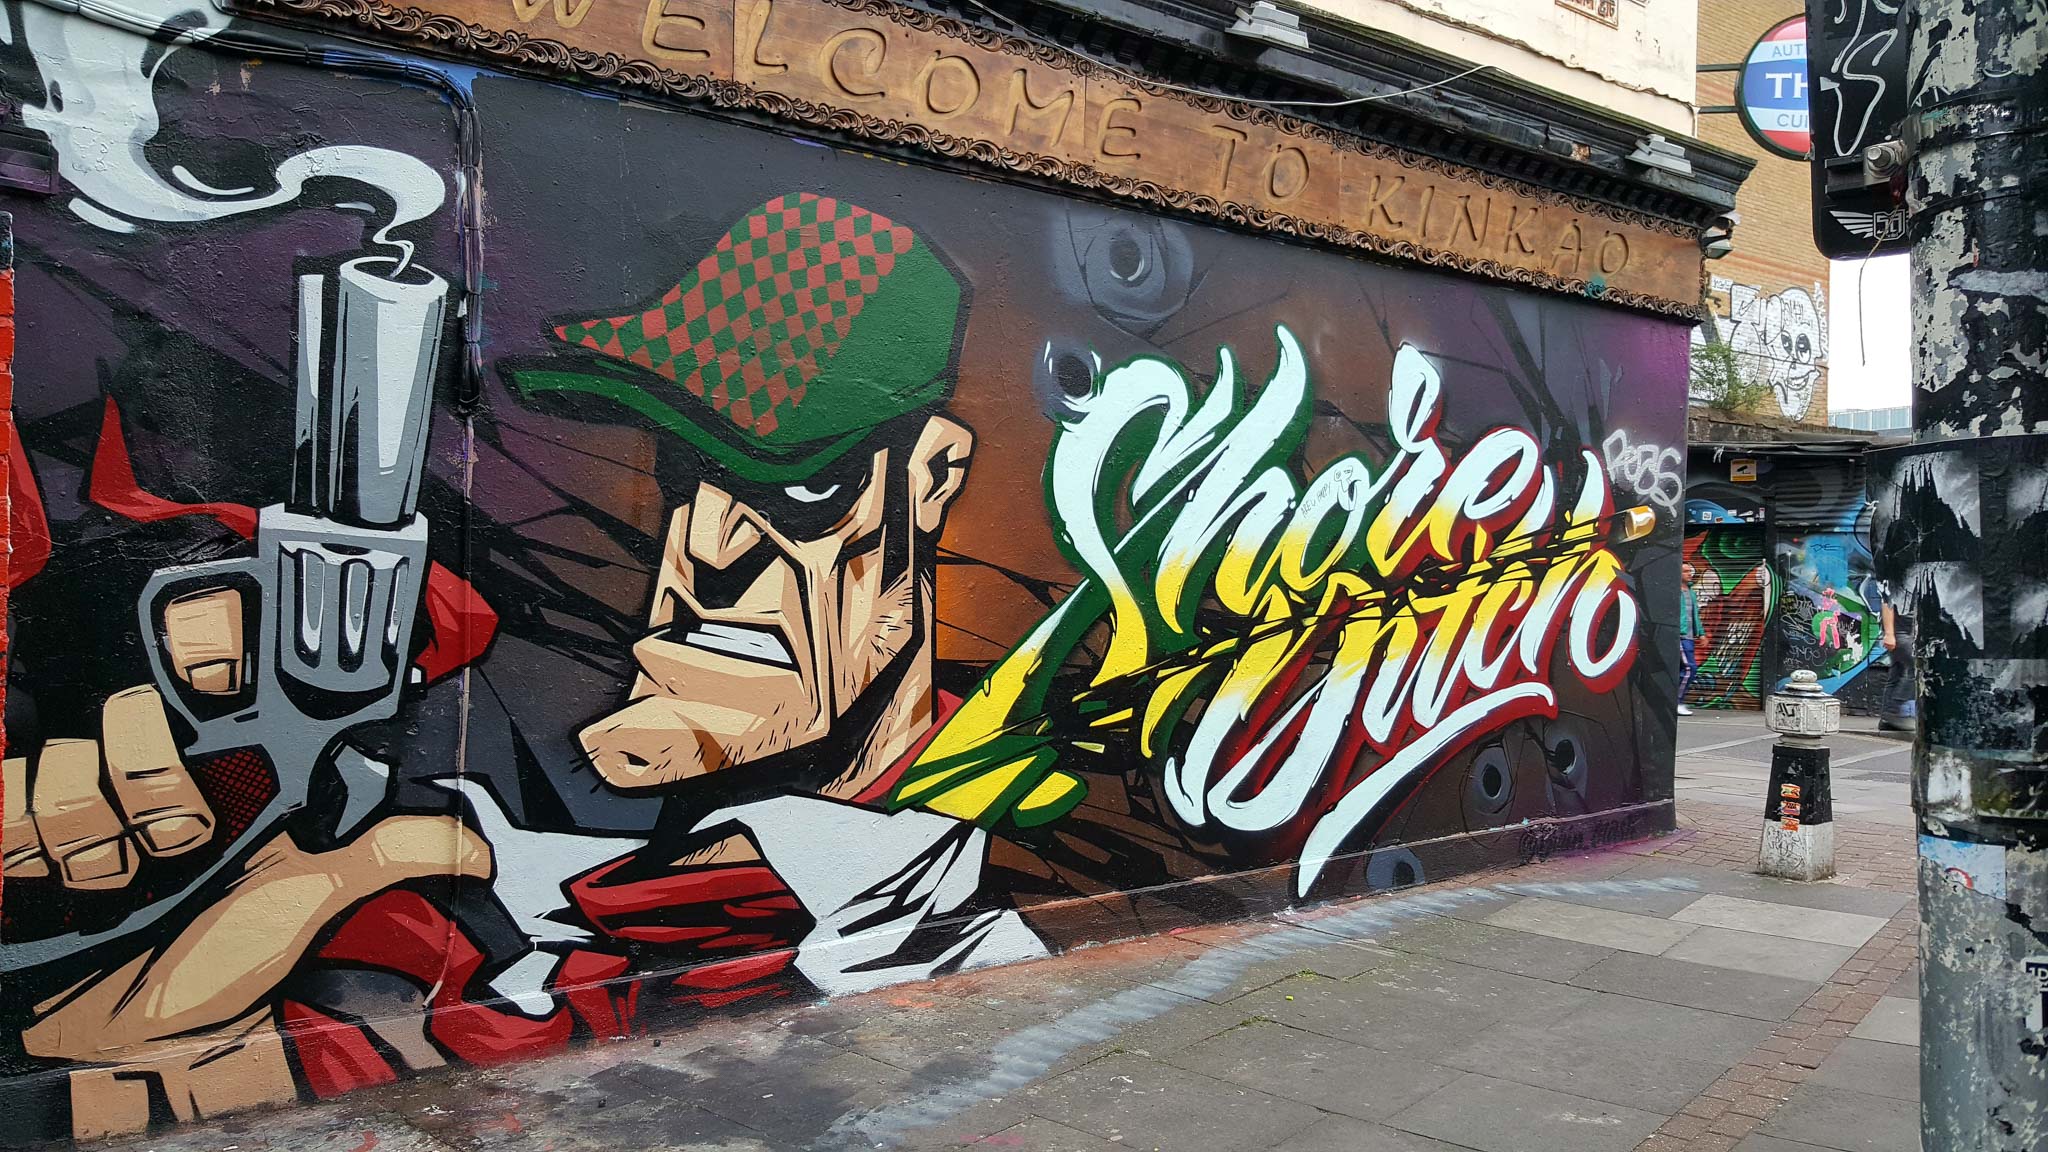 Streetart in Shoreditch, London, showing a gangster with a smoking gun